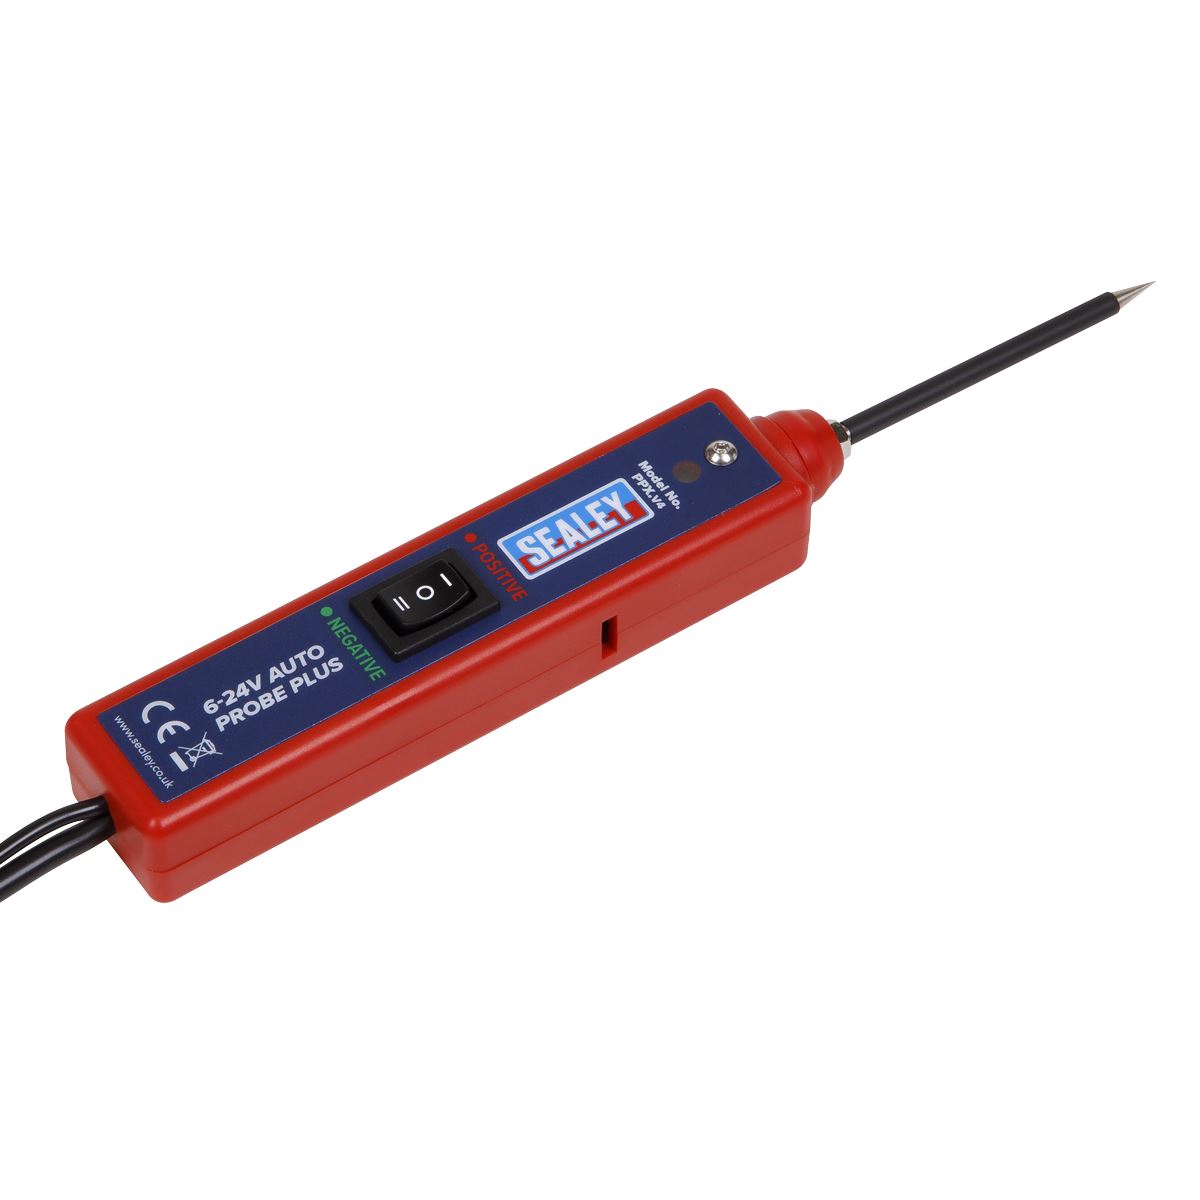 Sealey 6-24V Auto Probe Plus Circuit Electrical Tester Power Alarm